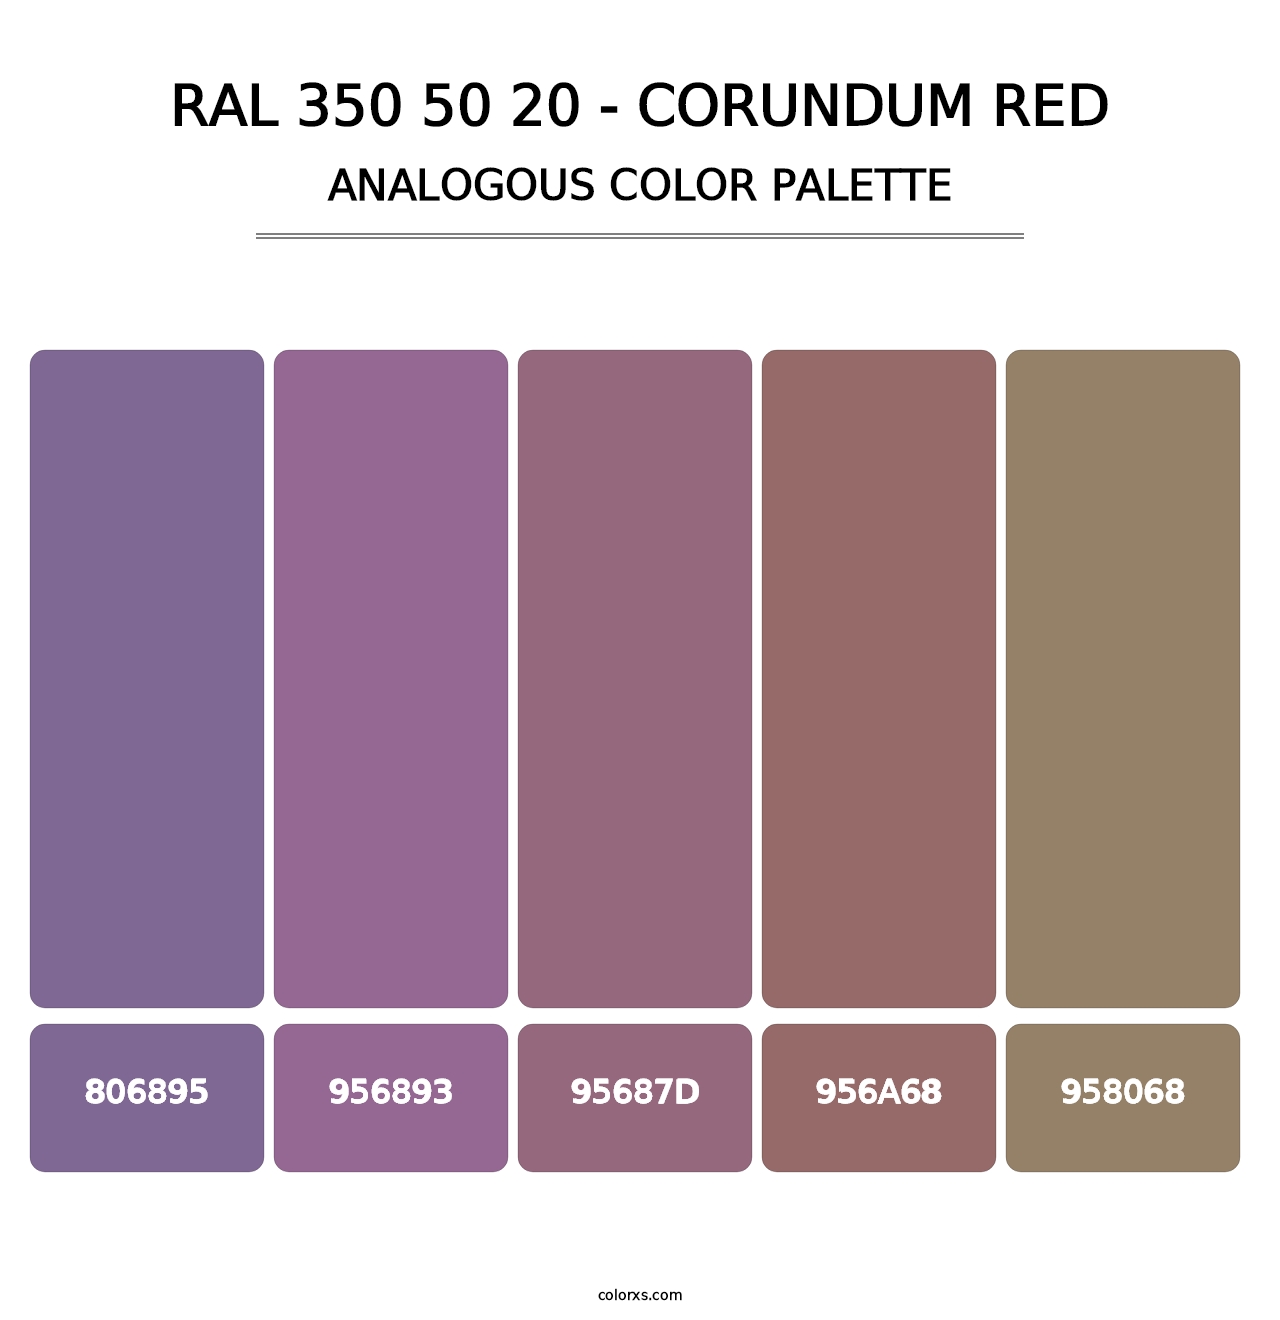 RAL 350 50 20 - Corundum Red - Analogous Color Palette